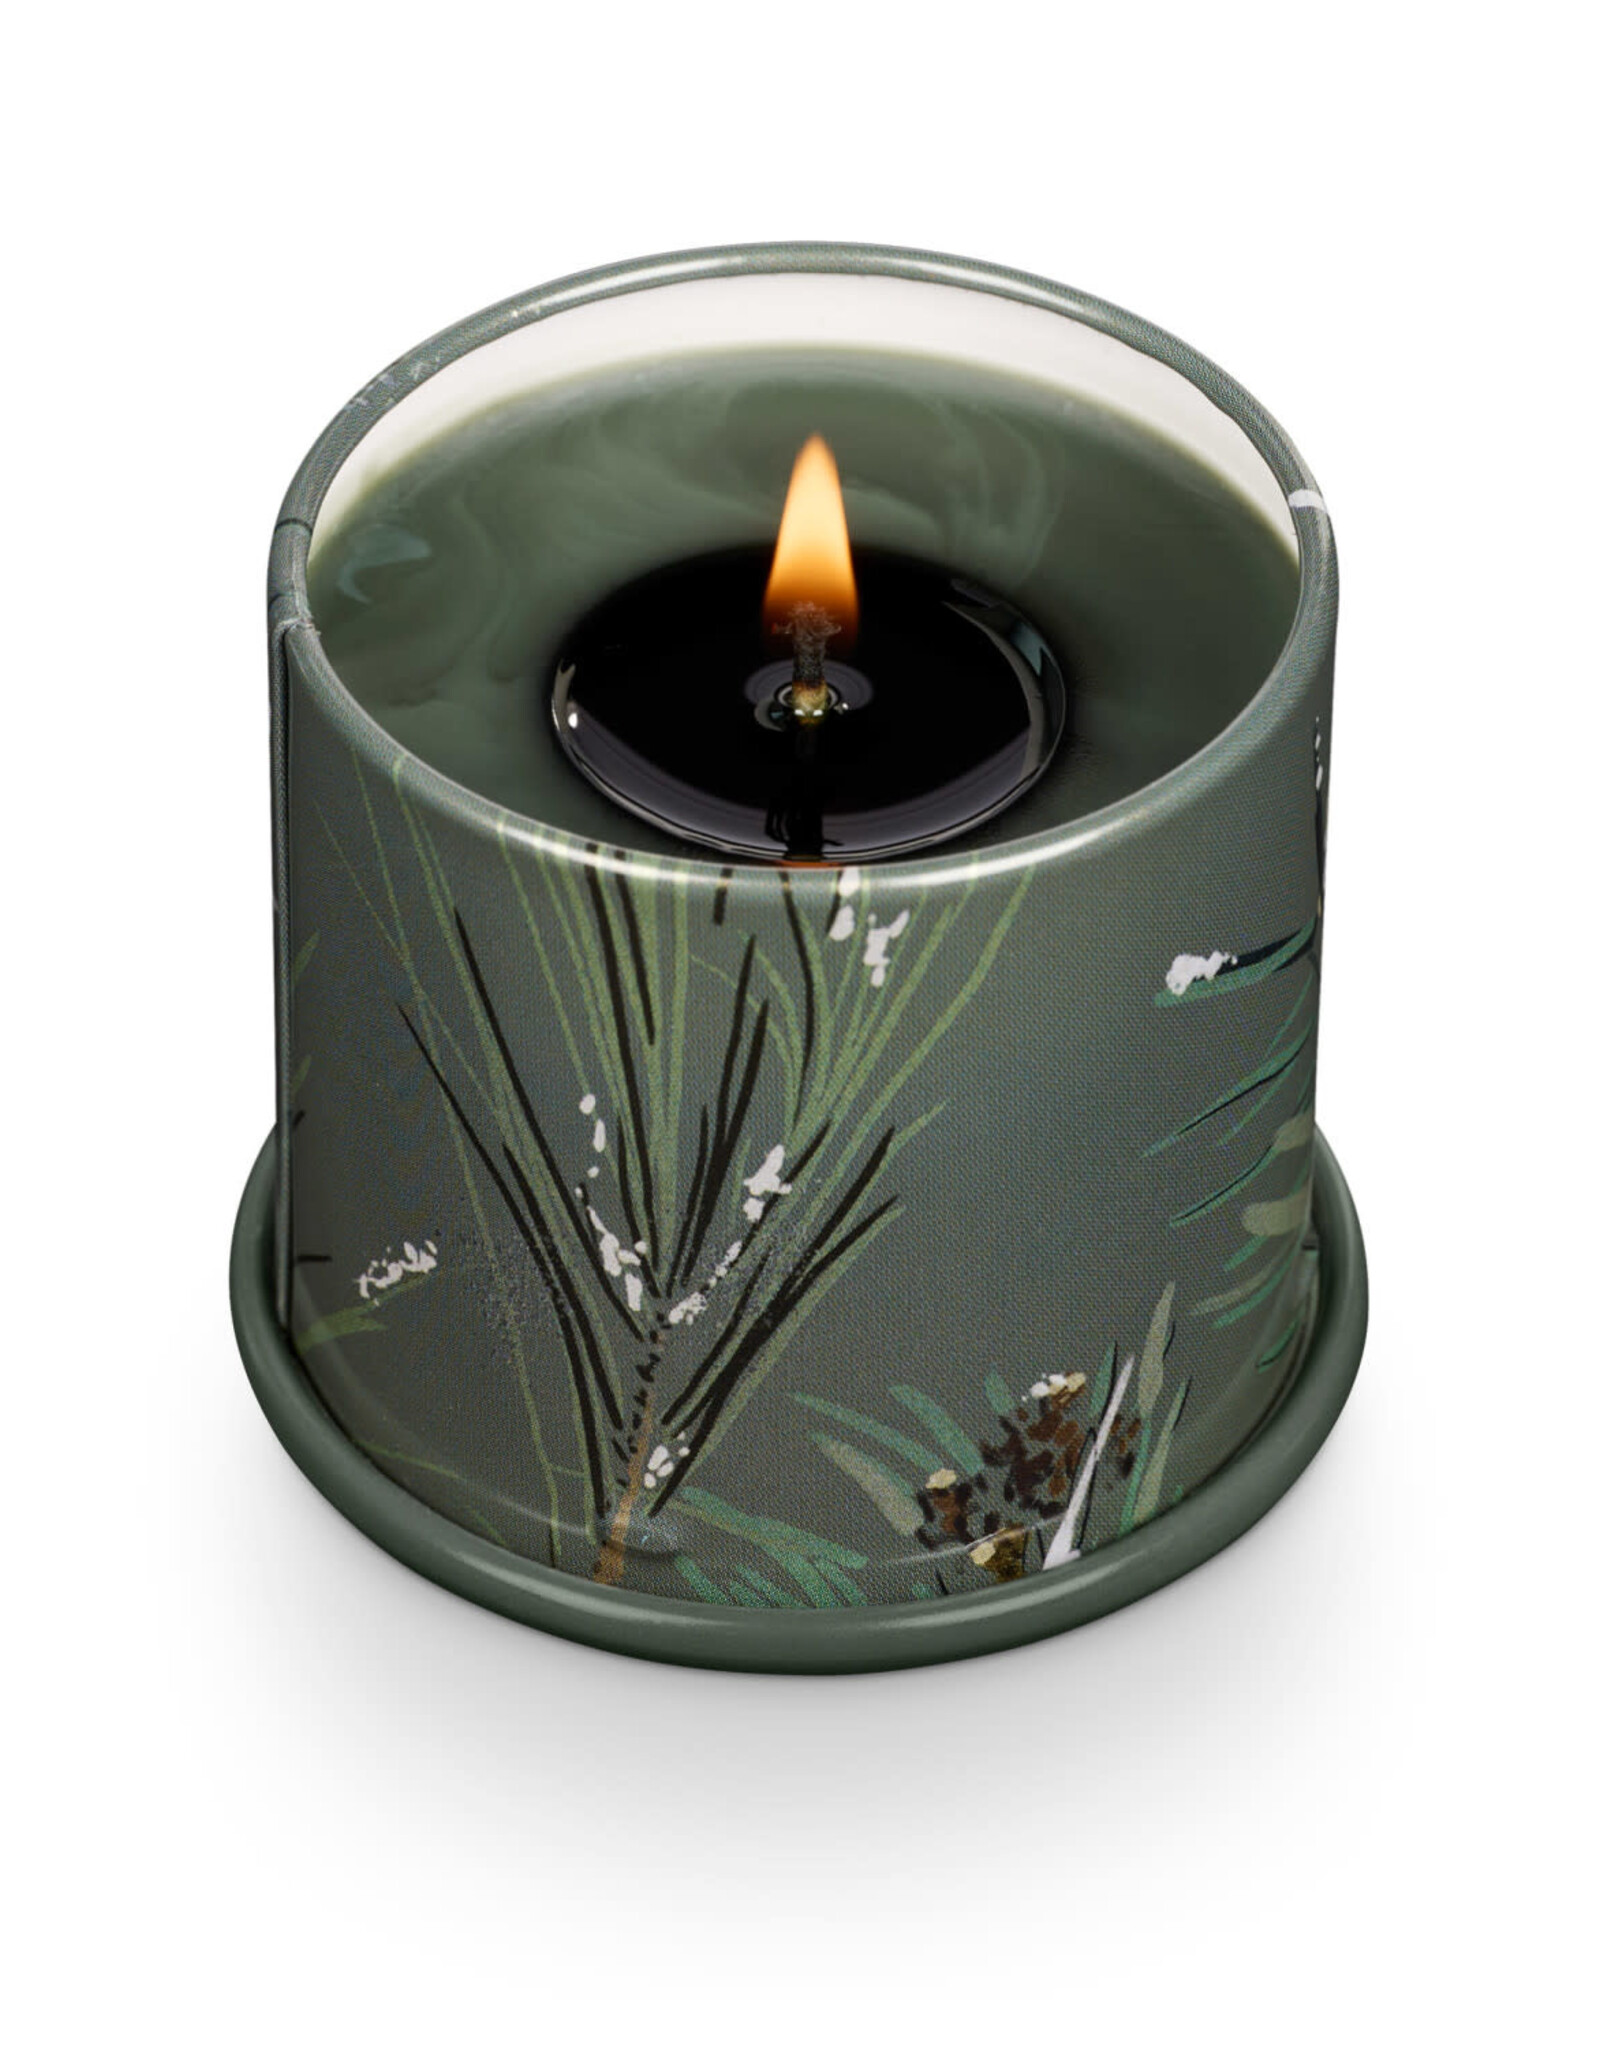 Illume Balsam & Cedar Demi Vanity Tin Candle